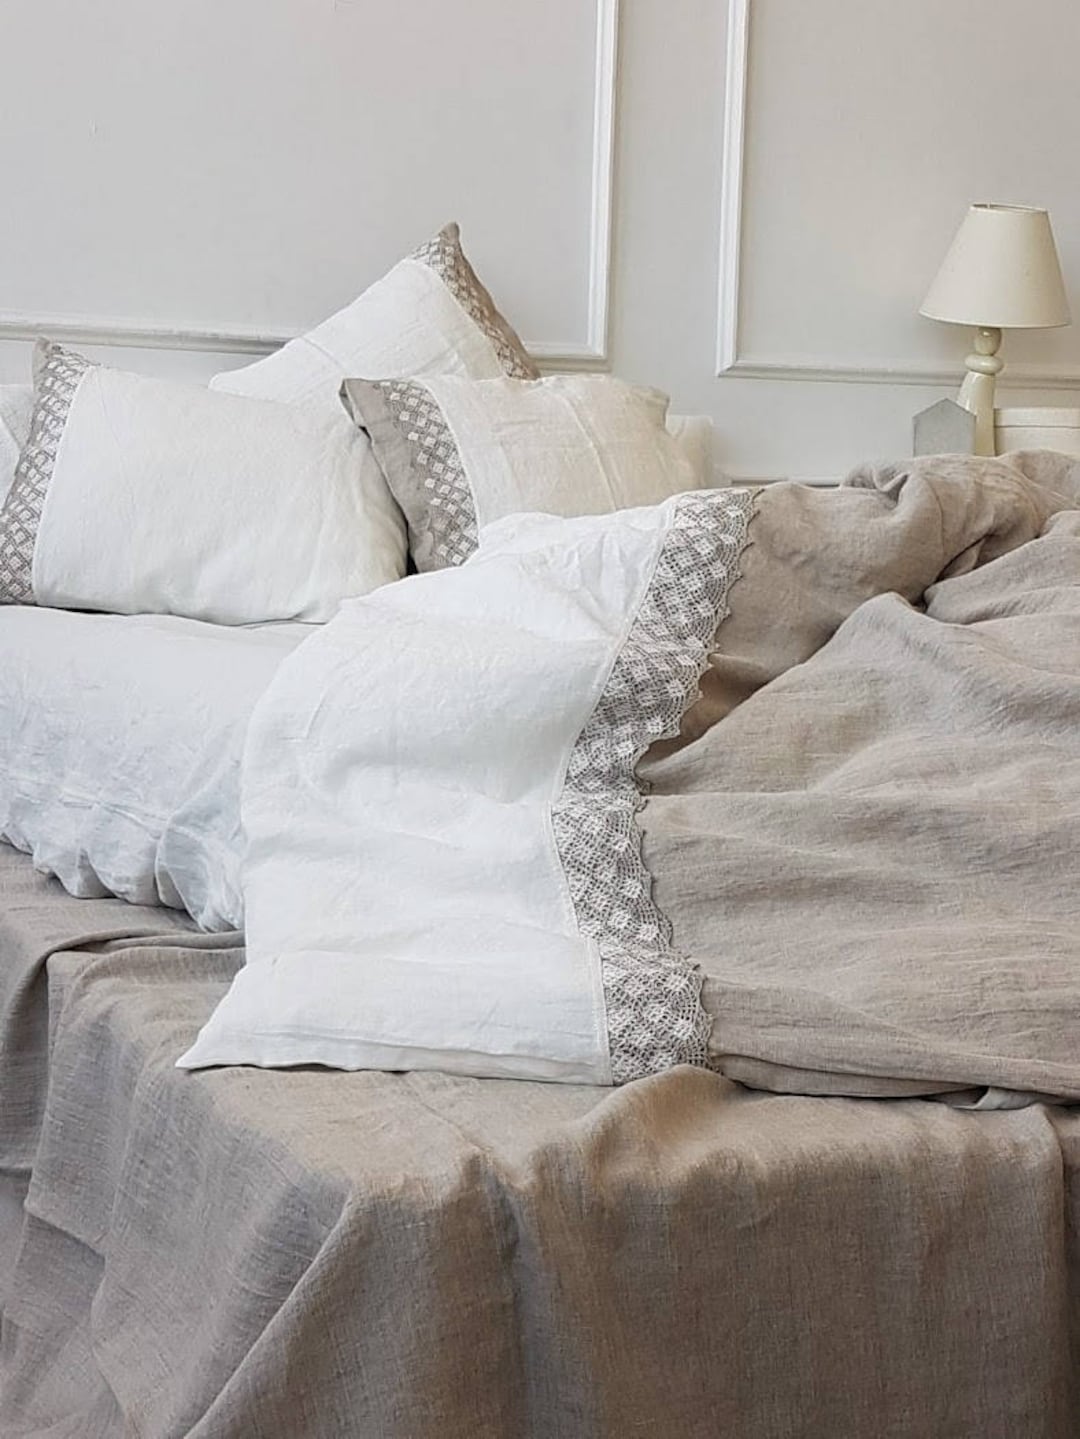 parure de lit chanel - Recherche Google  Chanel bedroom, Bed linens luxury,  Chanel bedding